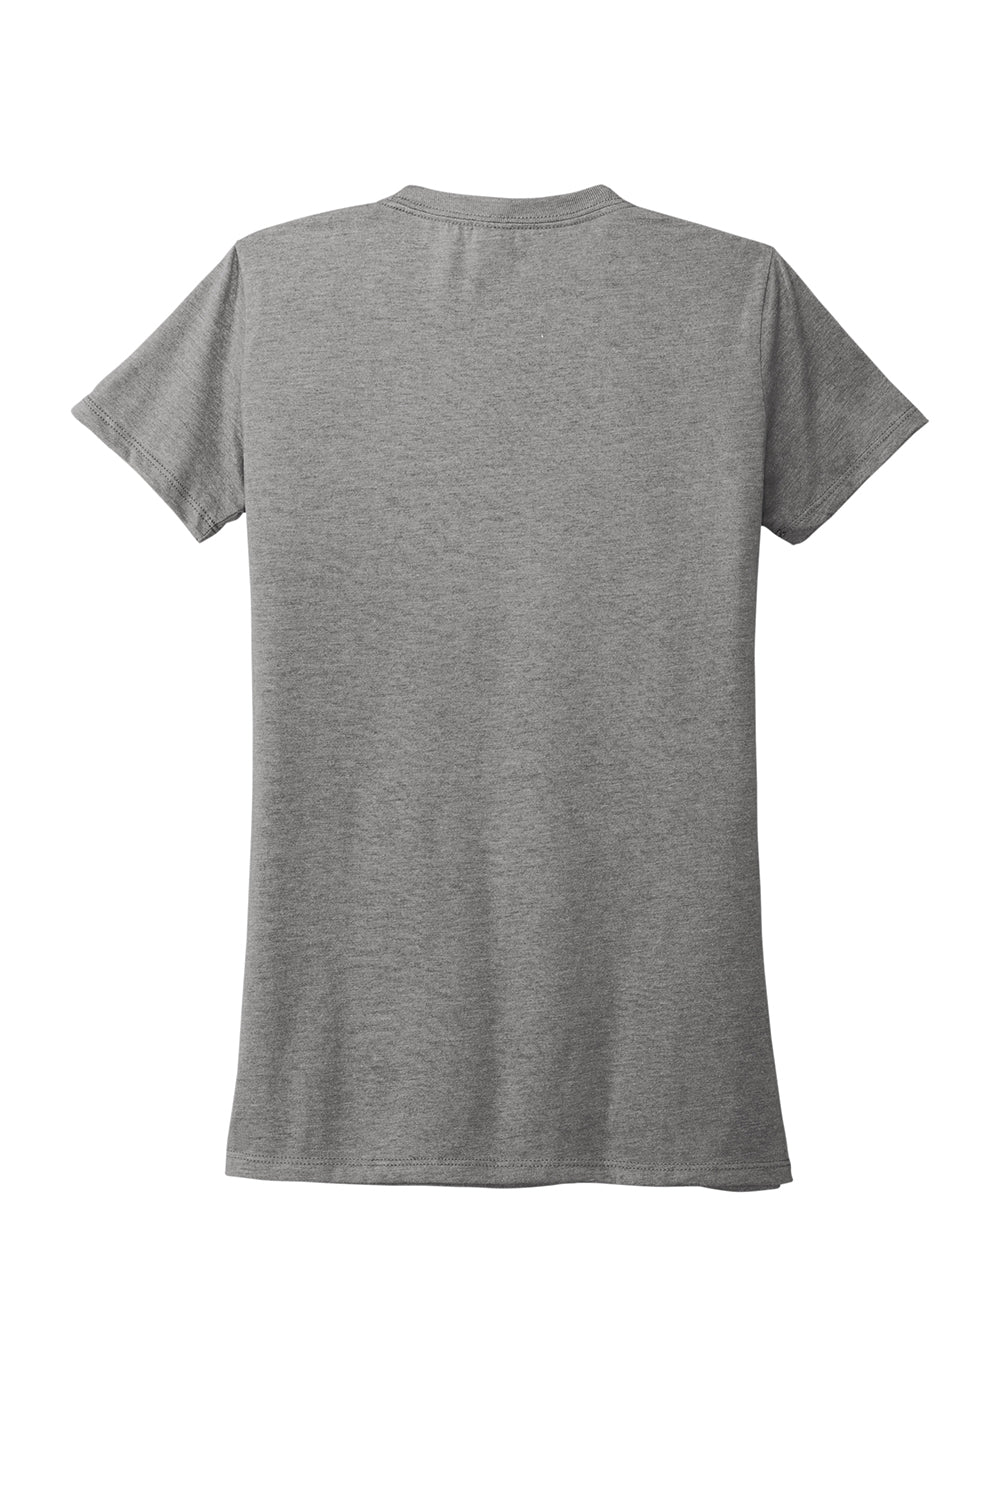 Allmade AL2008 Womens Short Sleeve Crewneck T-Shirt Aluminum Grey Flat Back